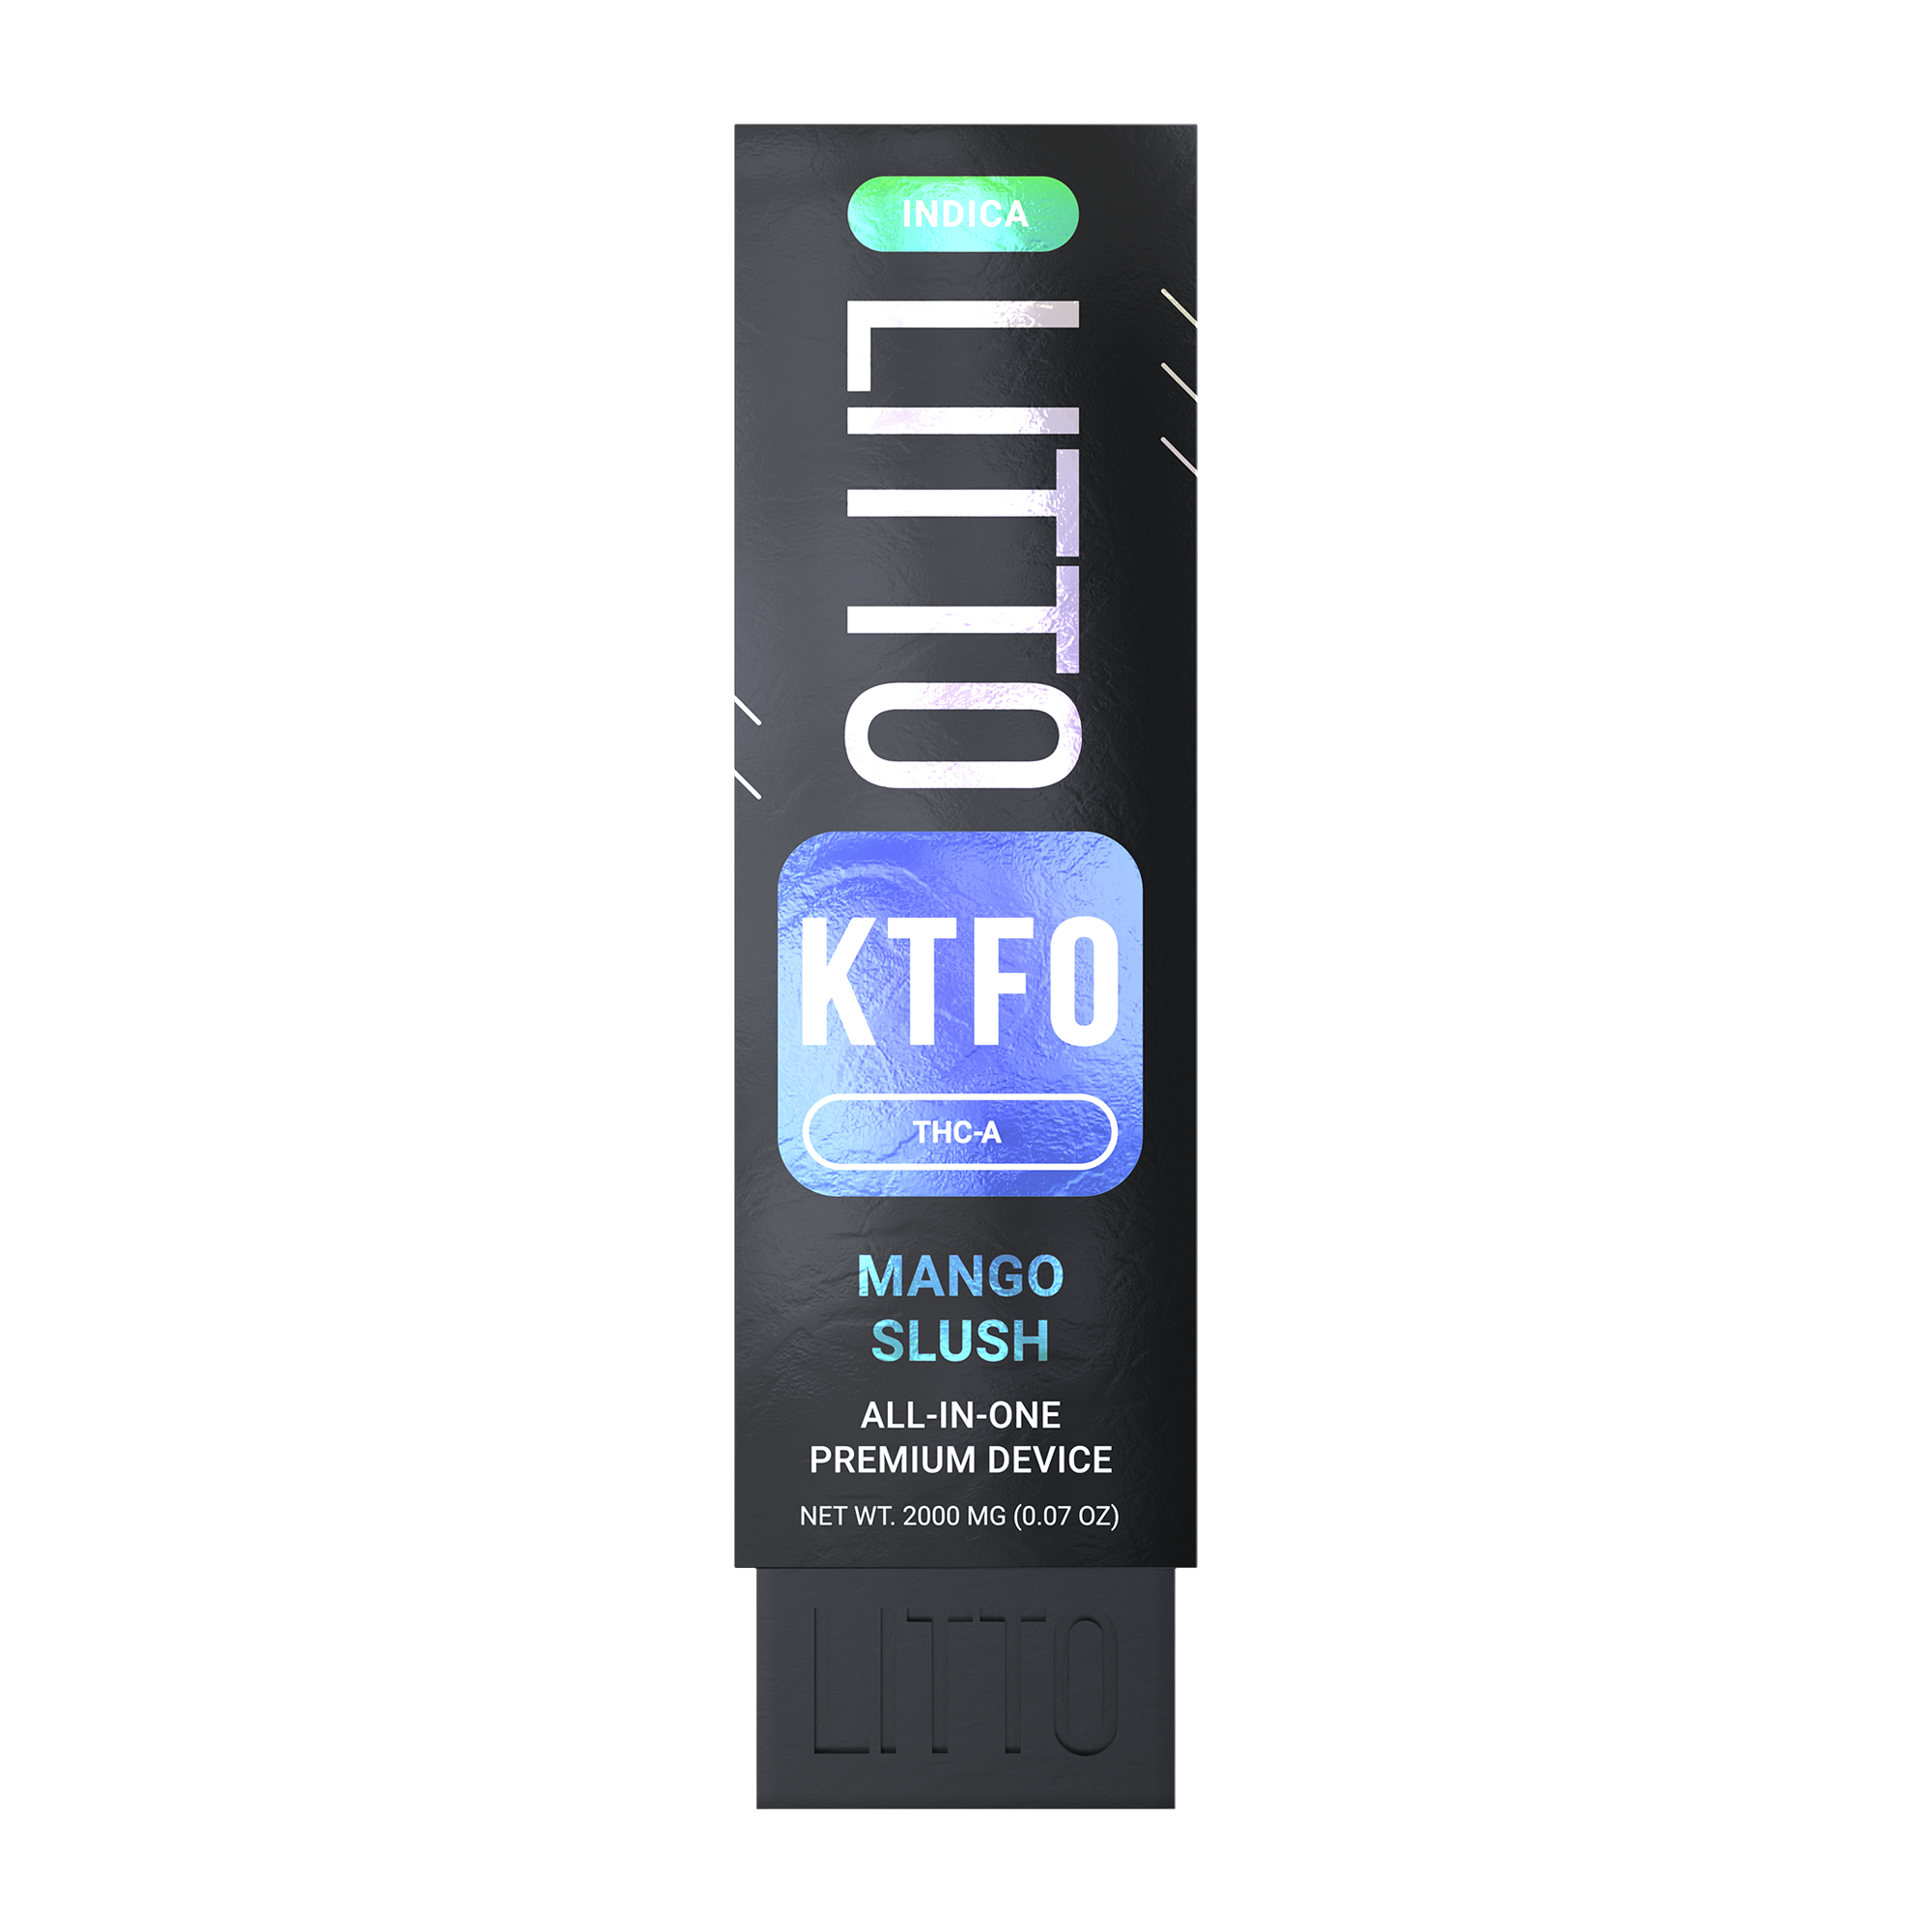 All-in-One Device - KTFO - Indica - THCA - Mango Slush - 2G